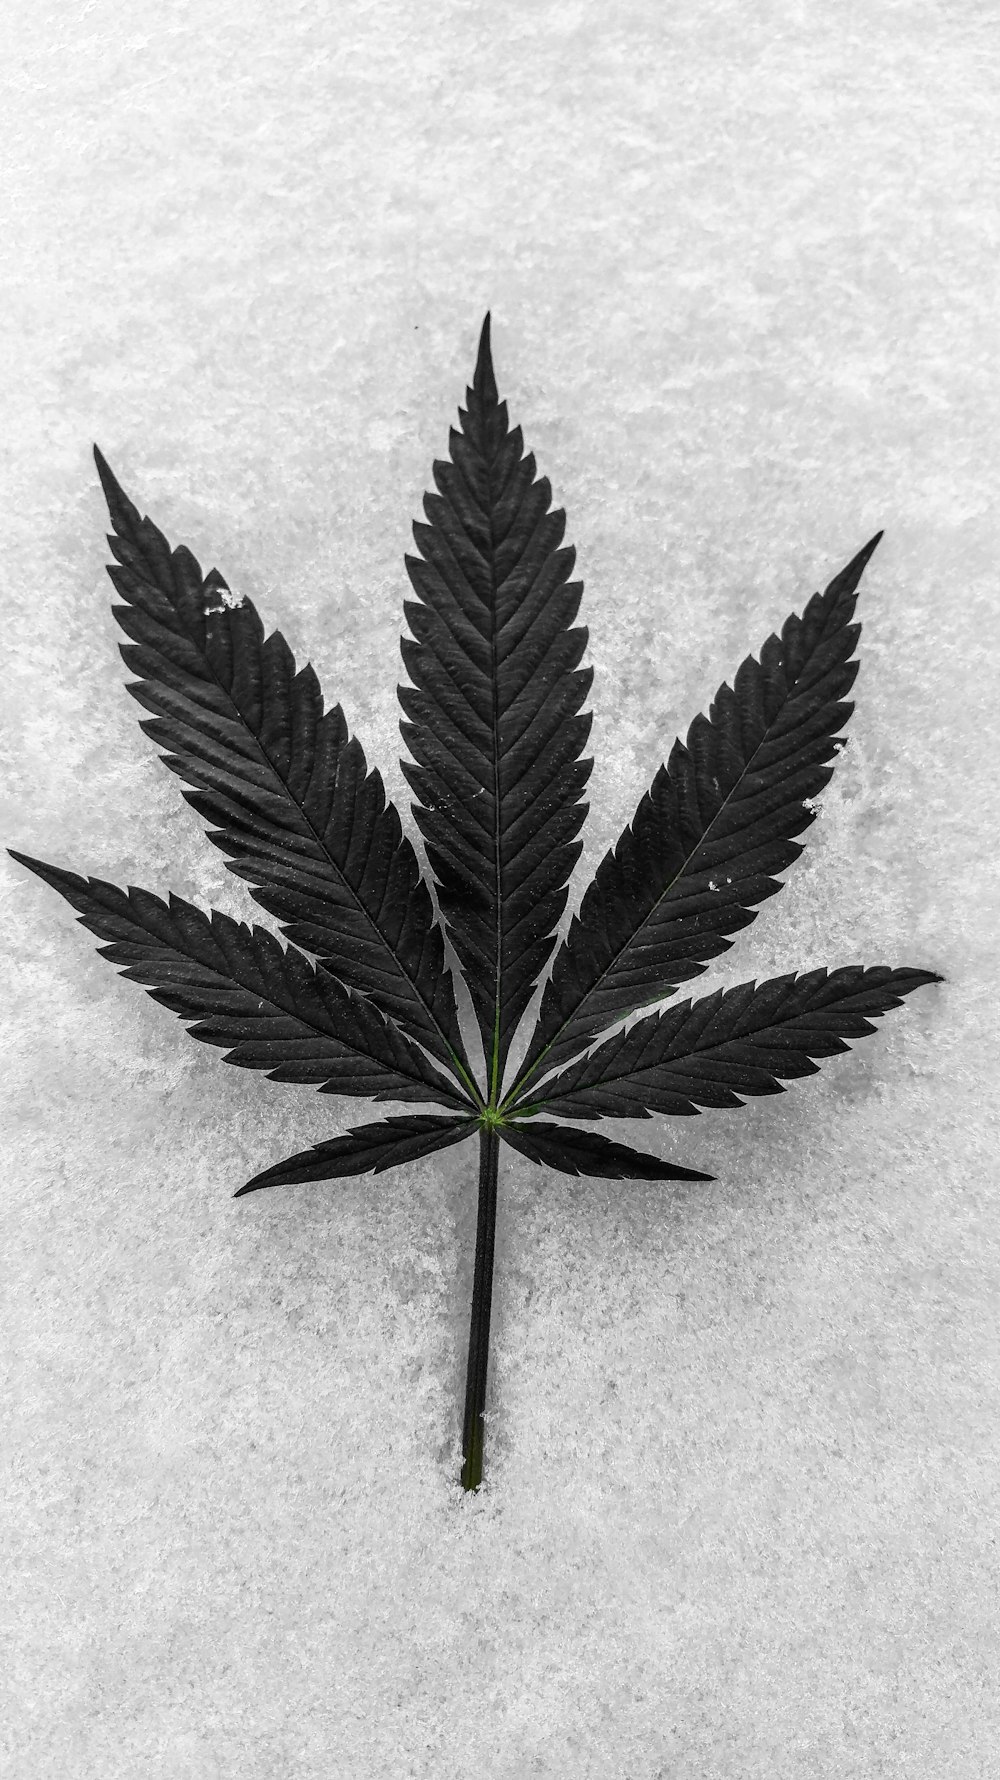 500+ Marijuana Leaf Pictures [HD] | Download Free Images on Unsplash